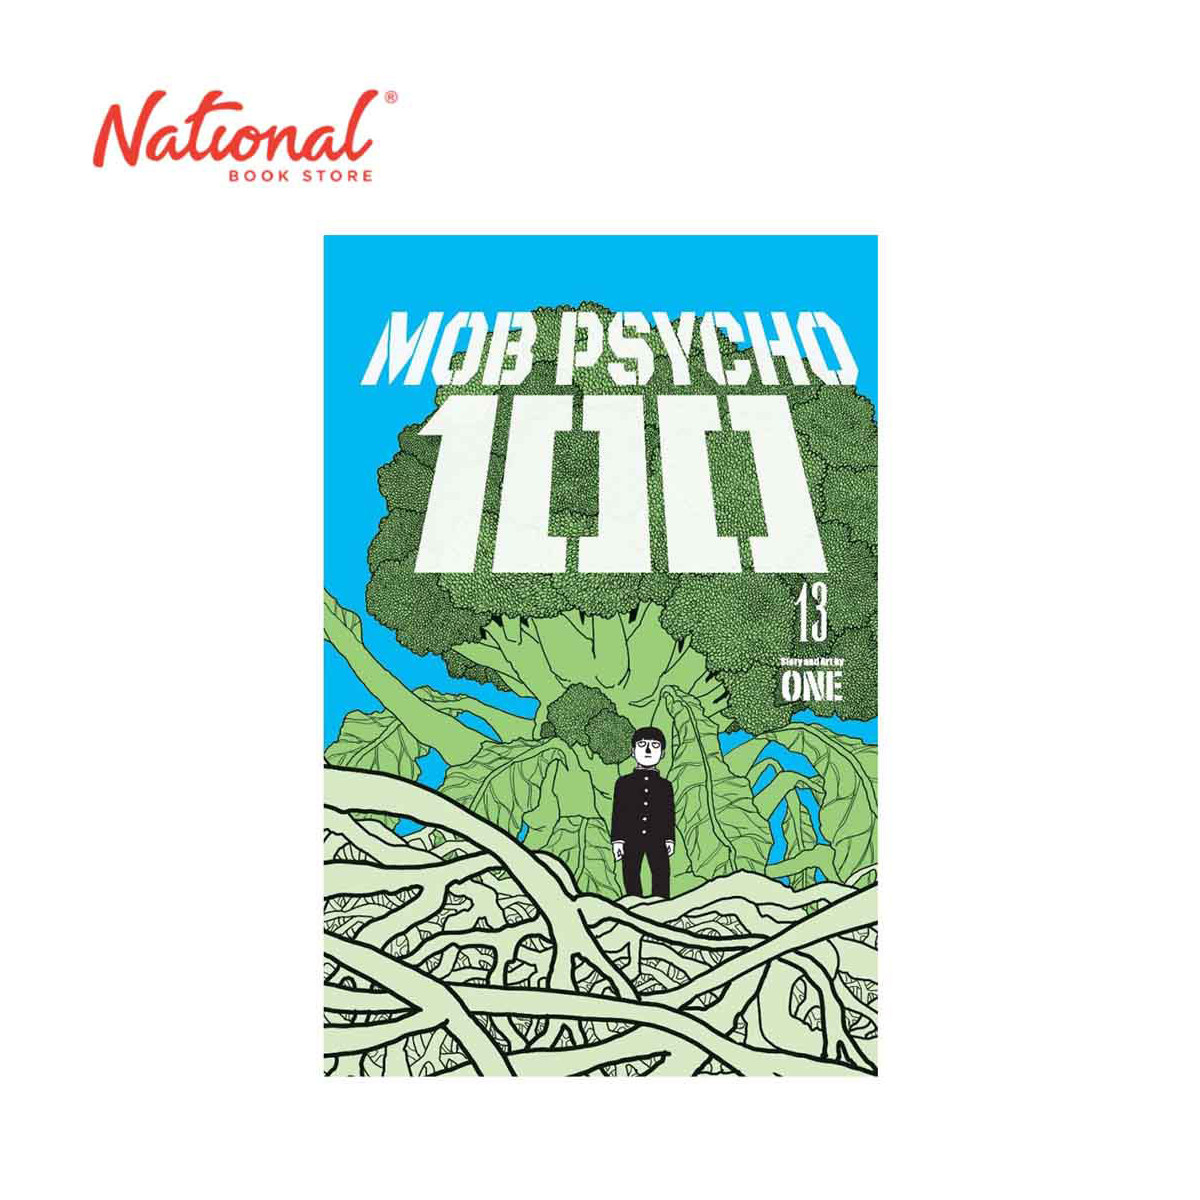 Mob Psycho 100 13 - Trade Paperback - Teens Comics - Manga